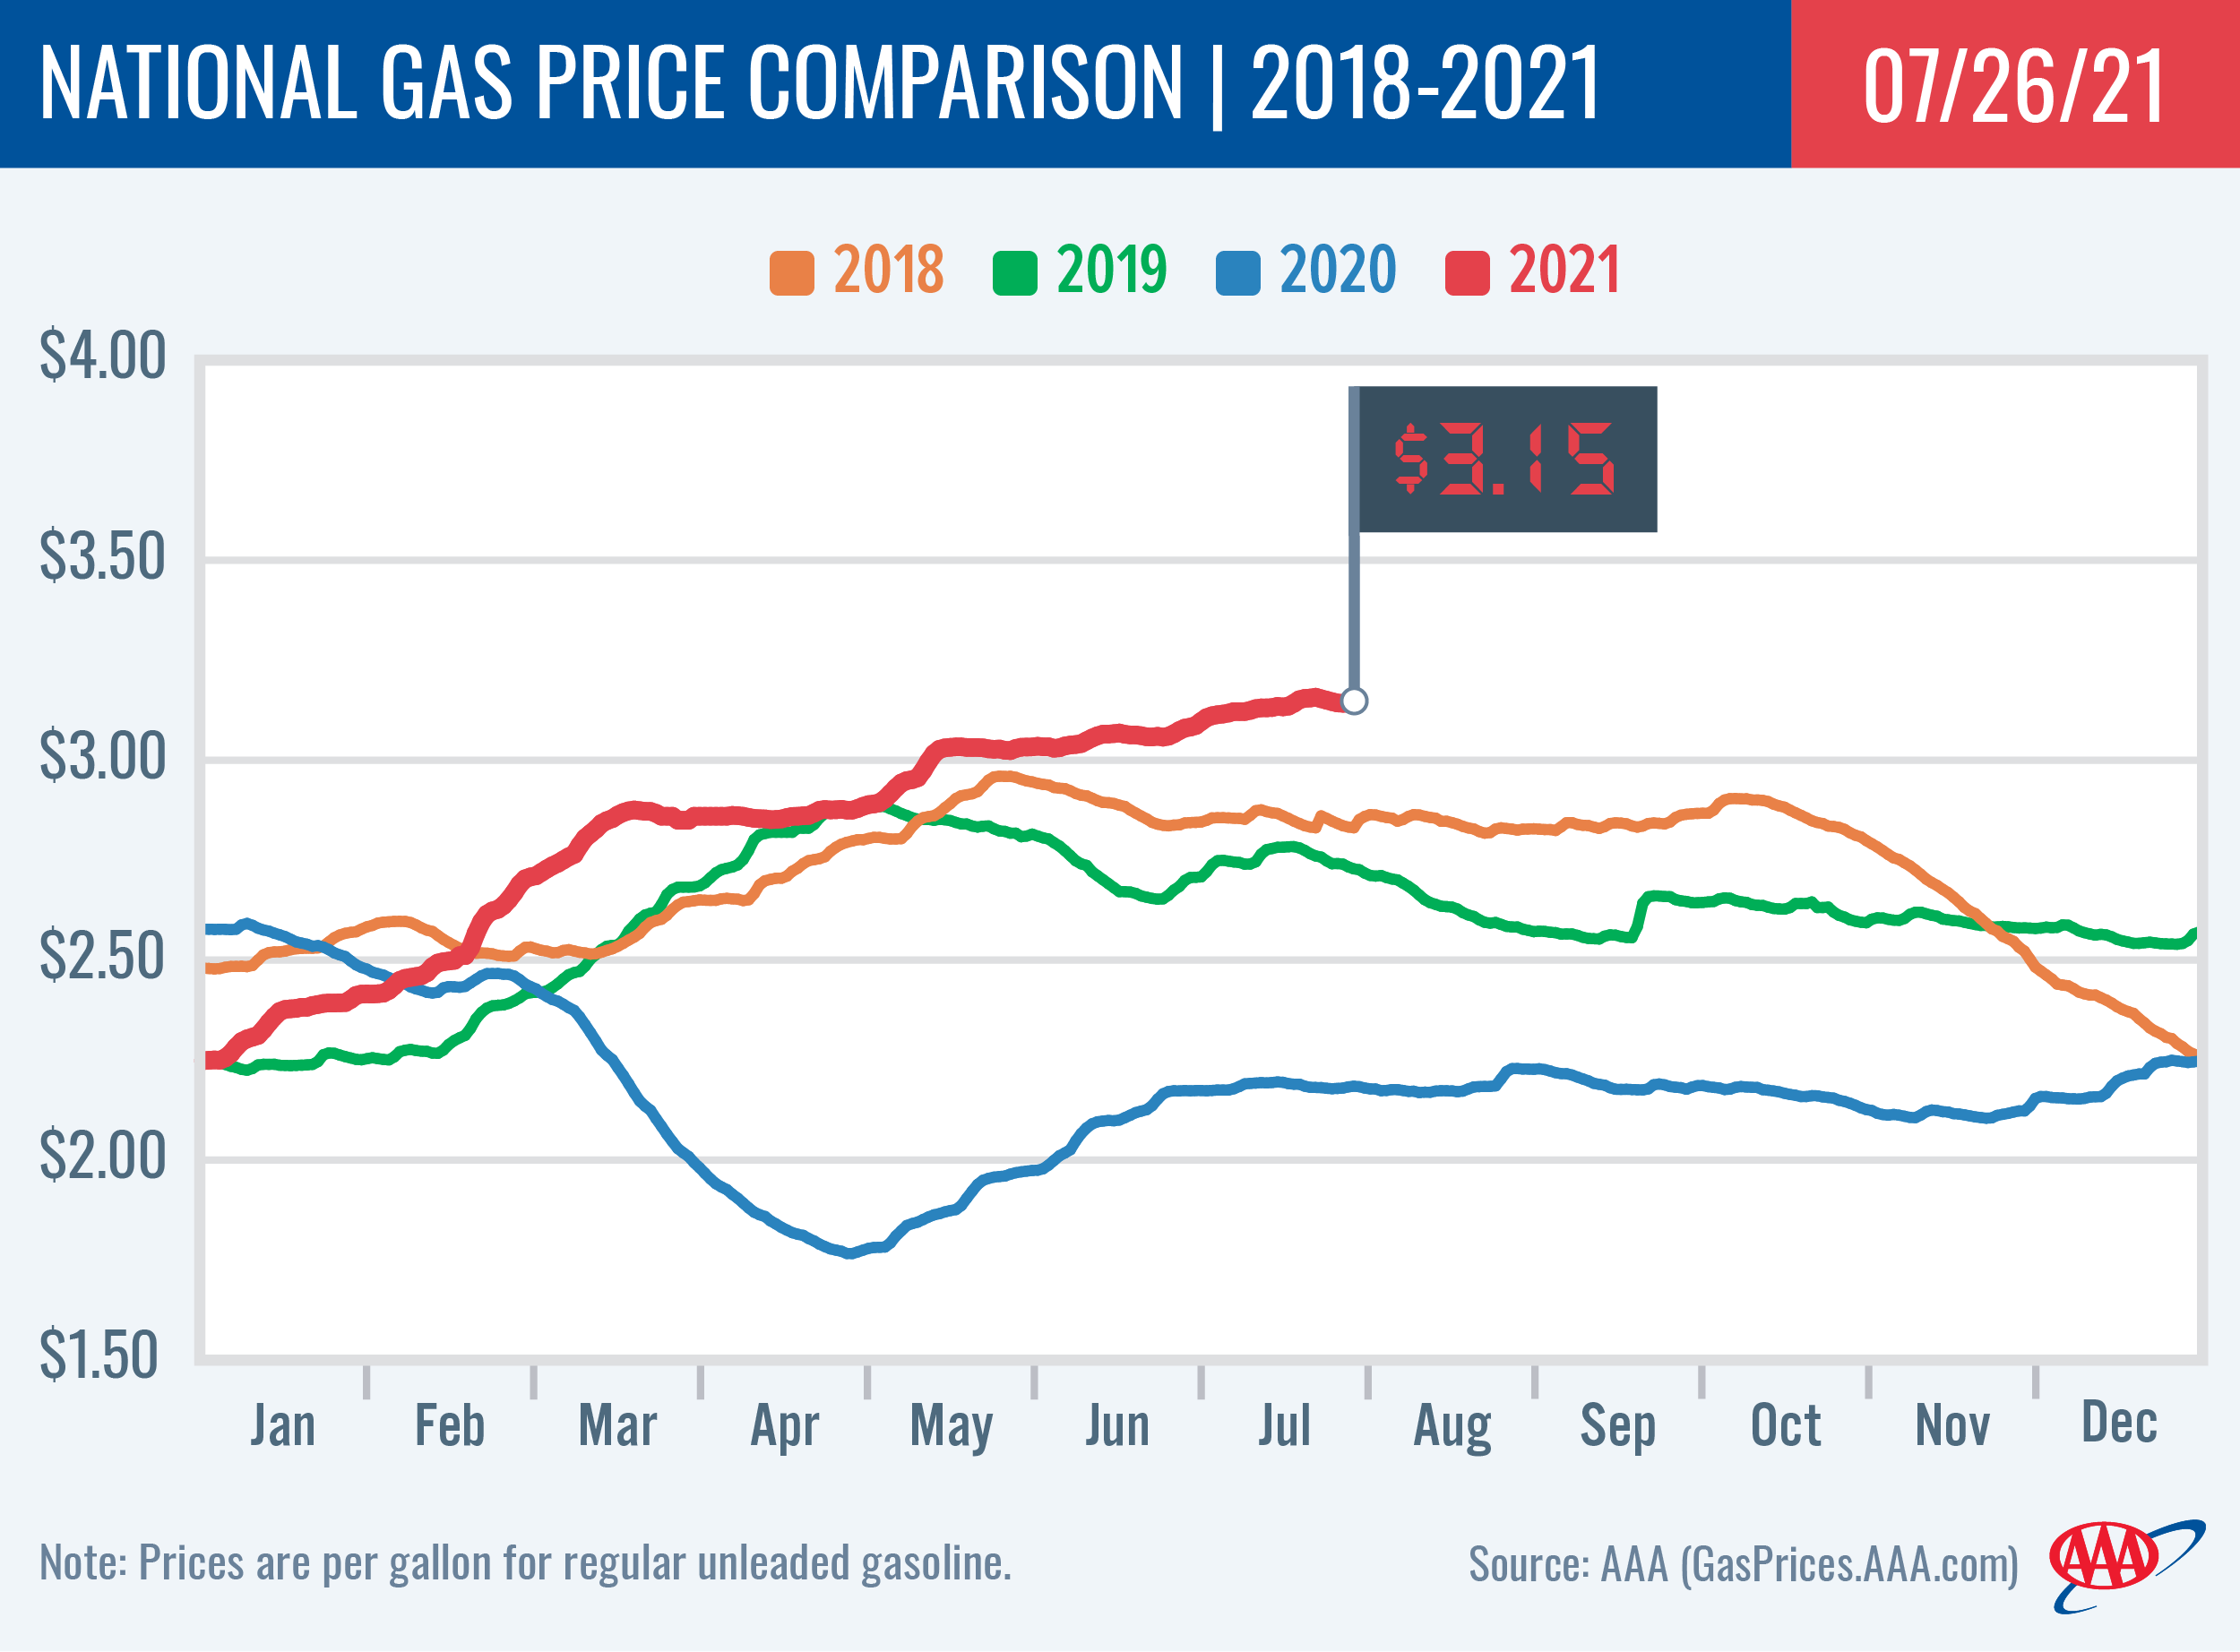 National Gas Price Comparison 7-26-21